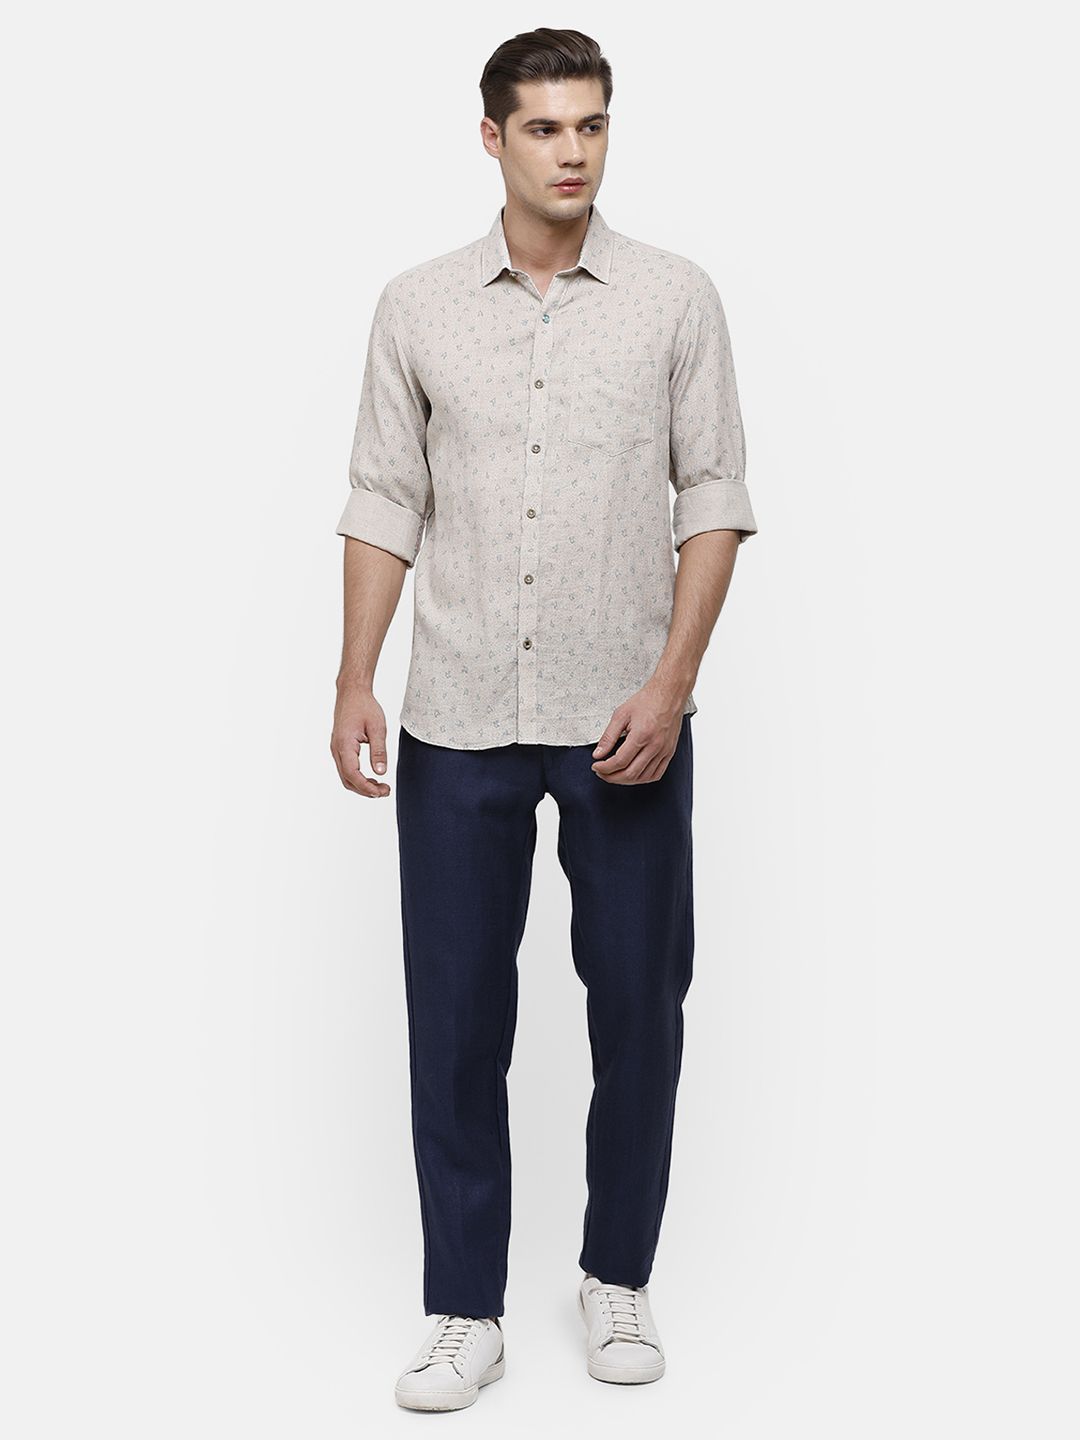 Linen Club Casual Shirts : Buy Linen Club Blue Embellished Shirt Online